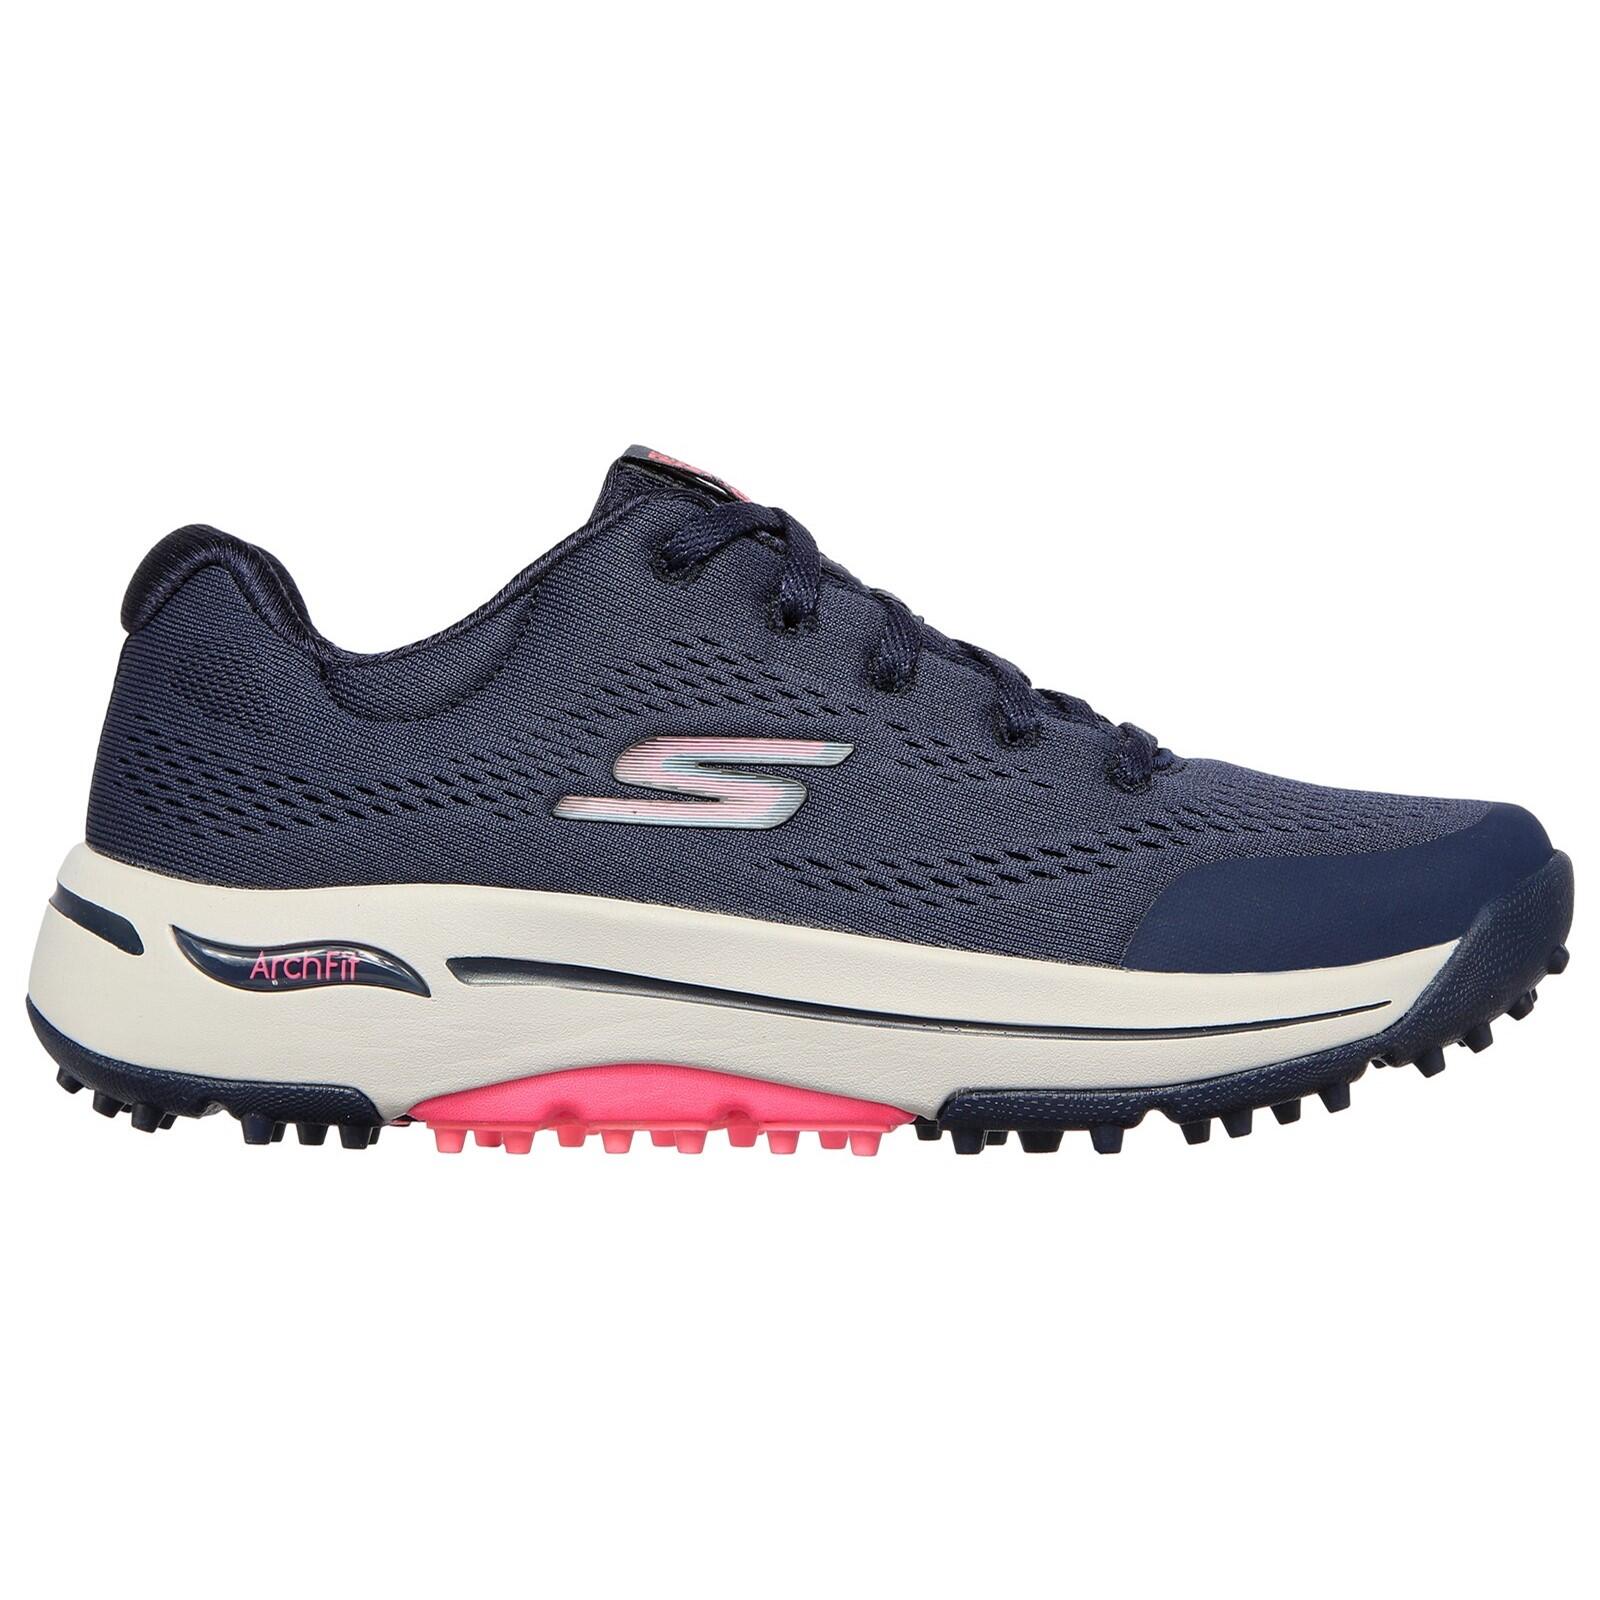 SKECHERS Go Golf Arch Fit Balance Golf Shoes Navy blue